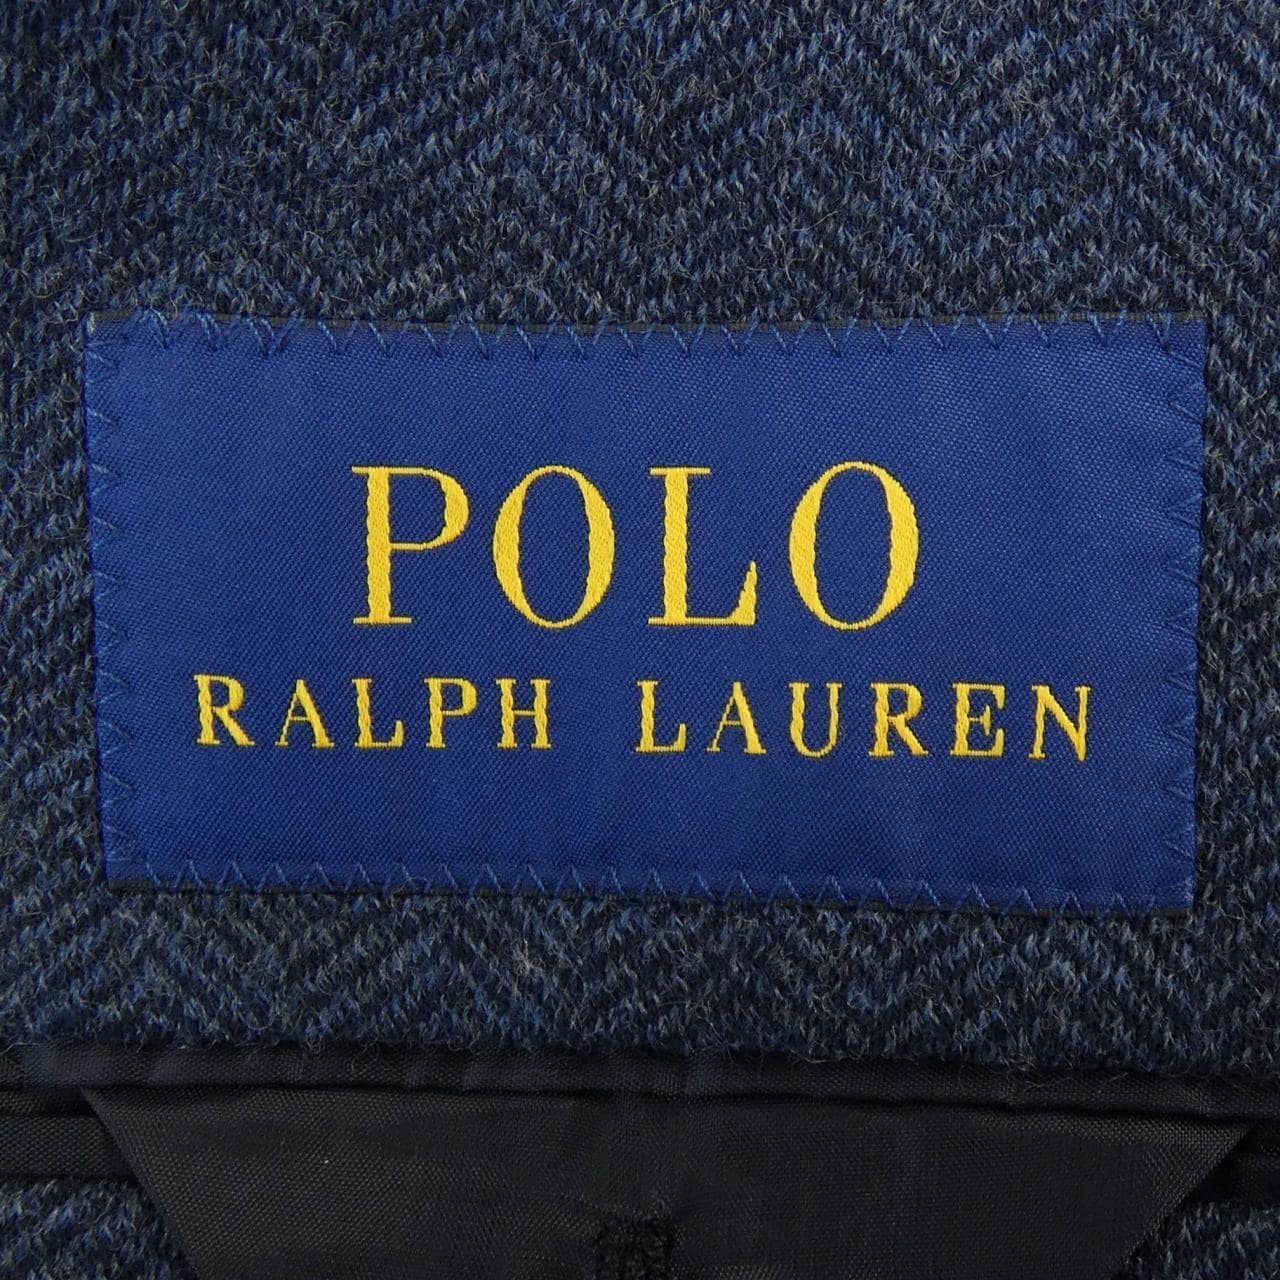 Polo Ralph Lauren POLO RALPH LAUREN jacket